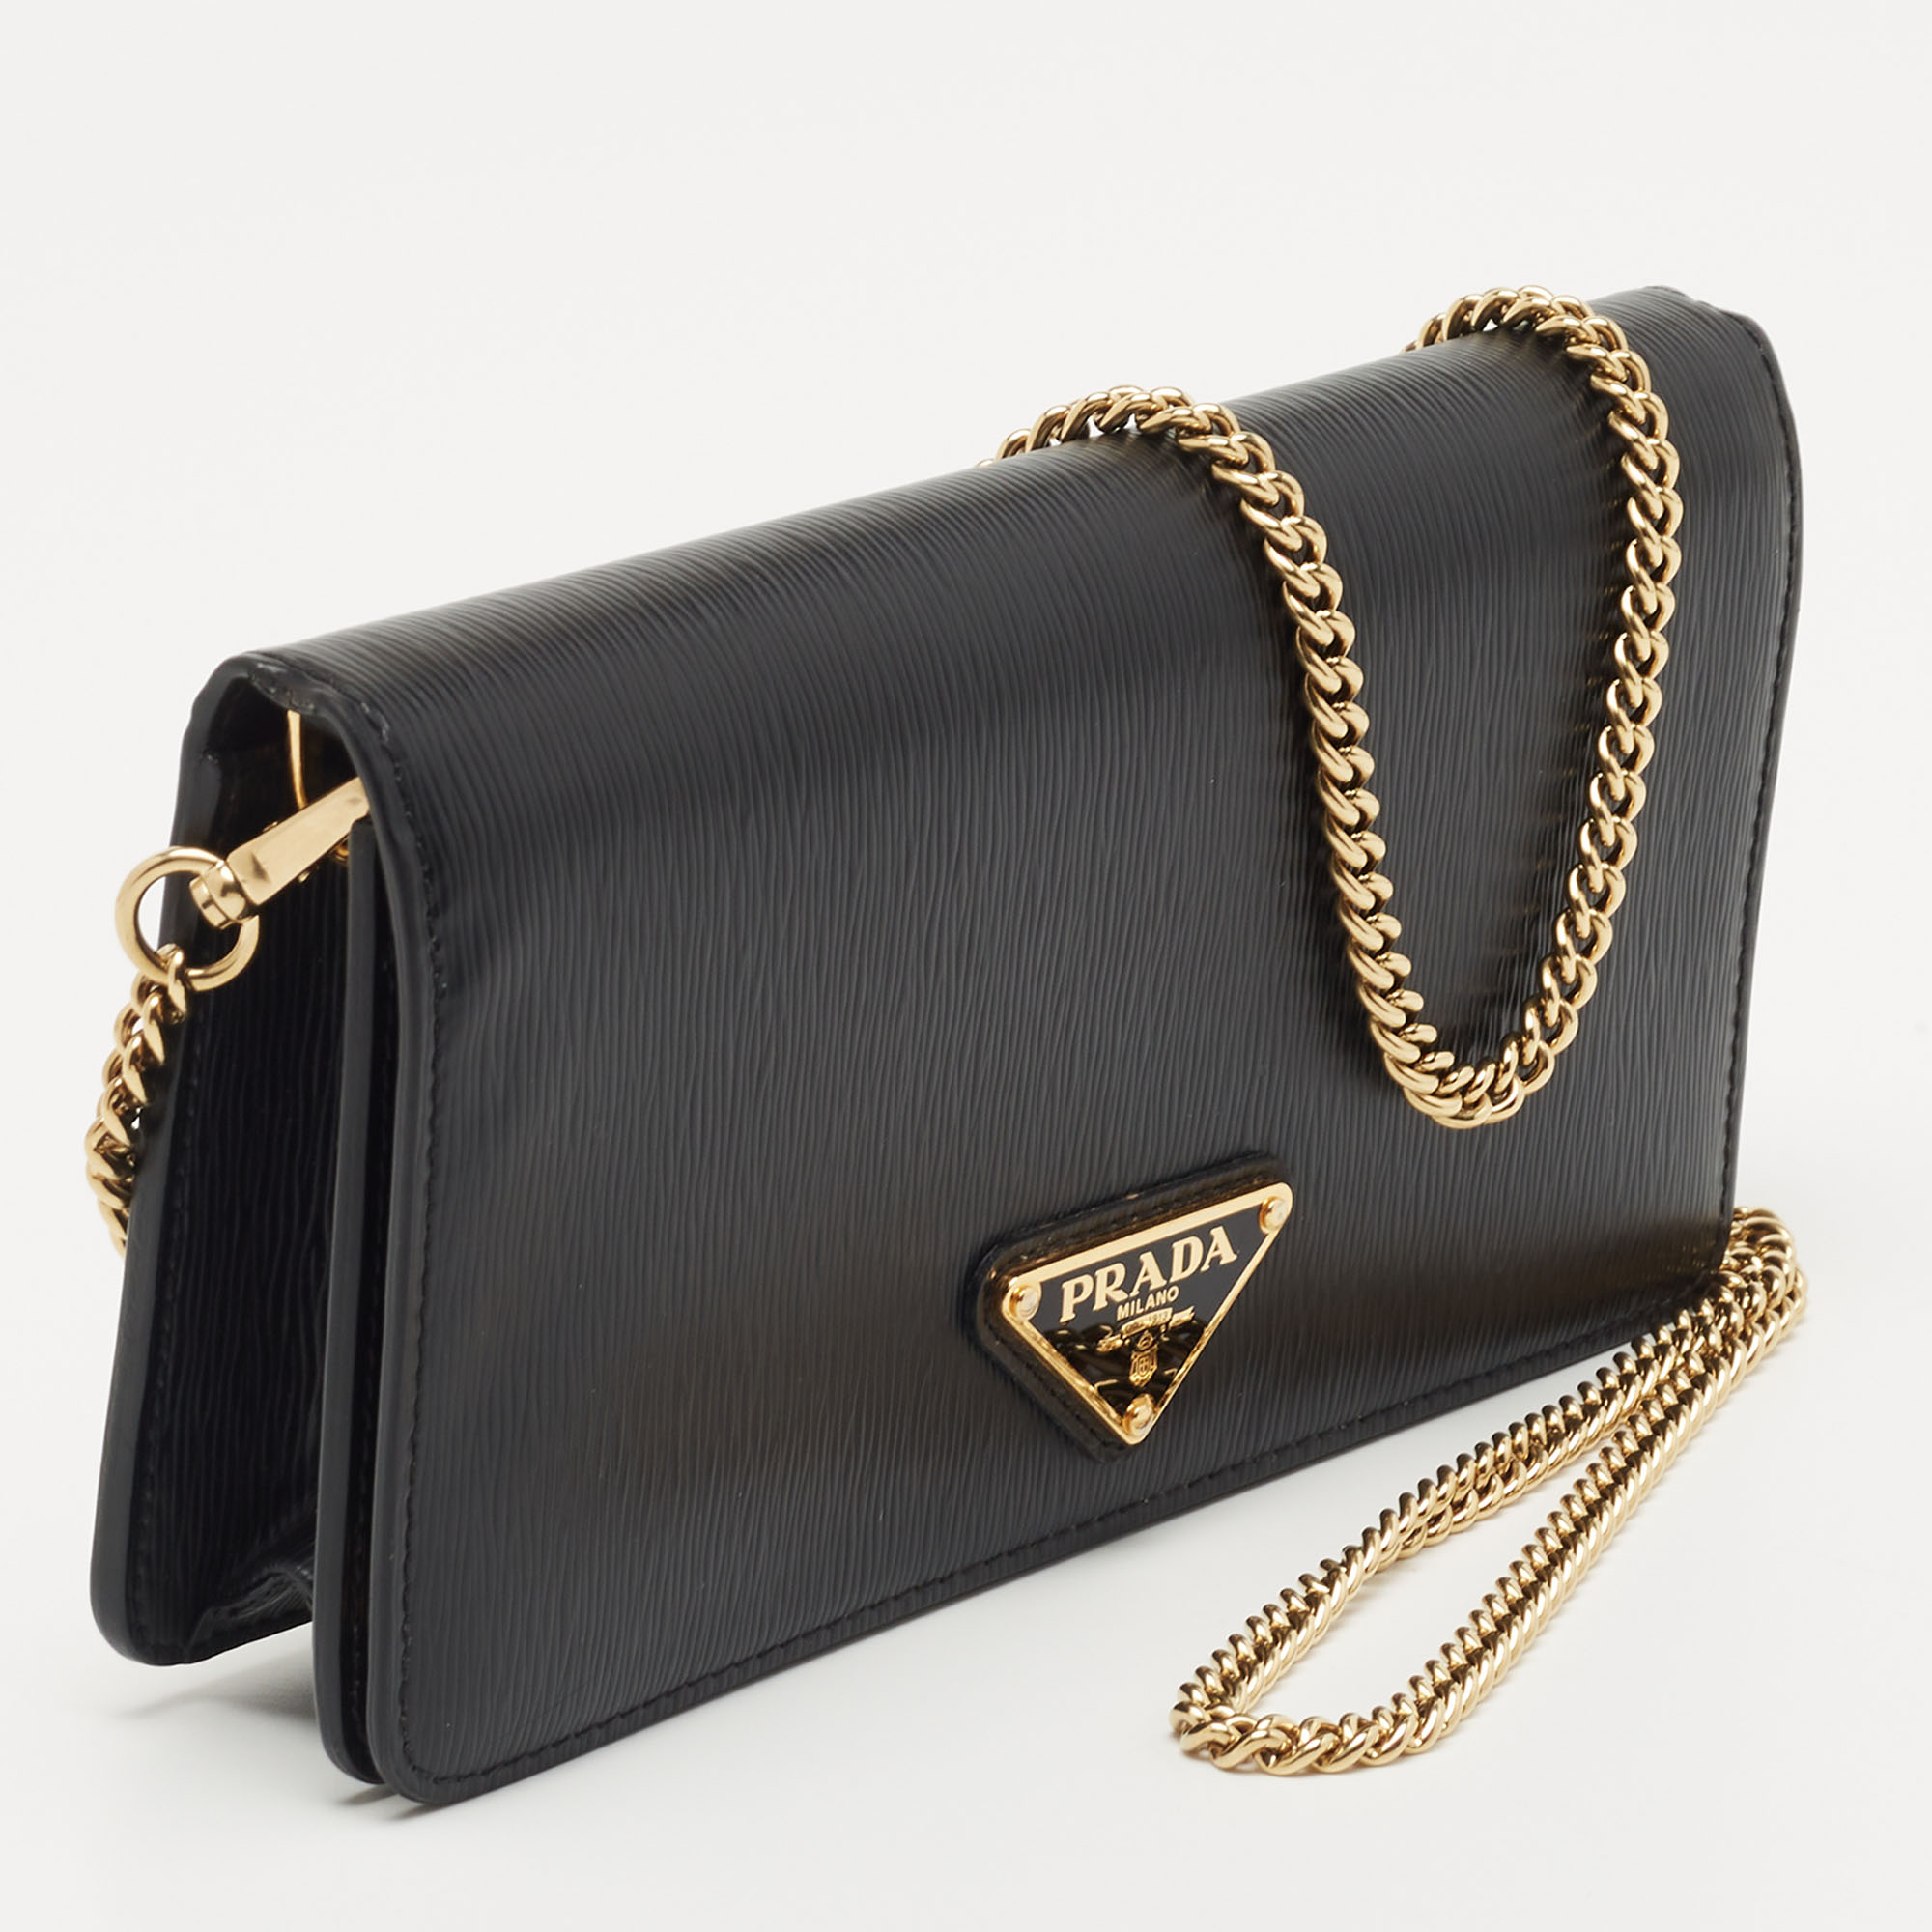 Prada Black Saffiano Metal Leather Wallet on Chain Clutch Bag